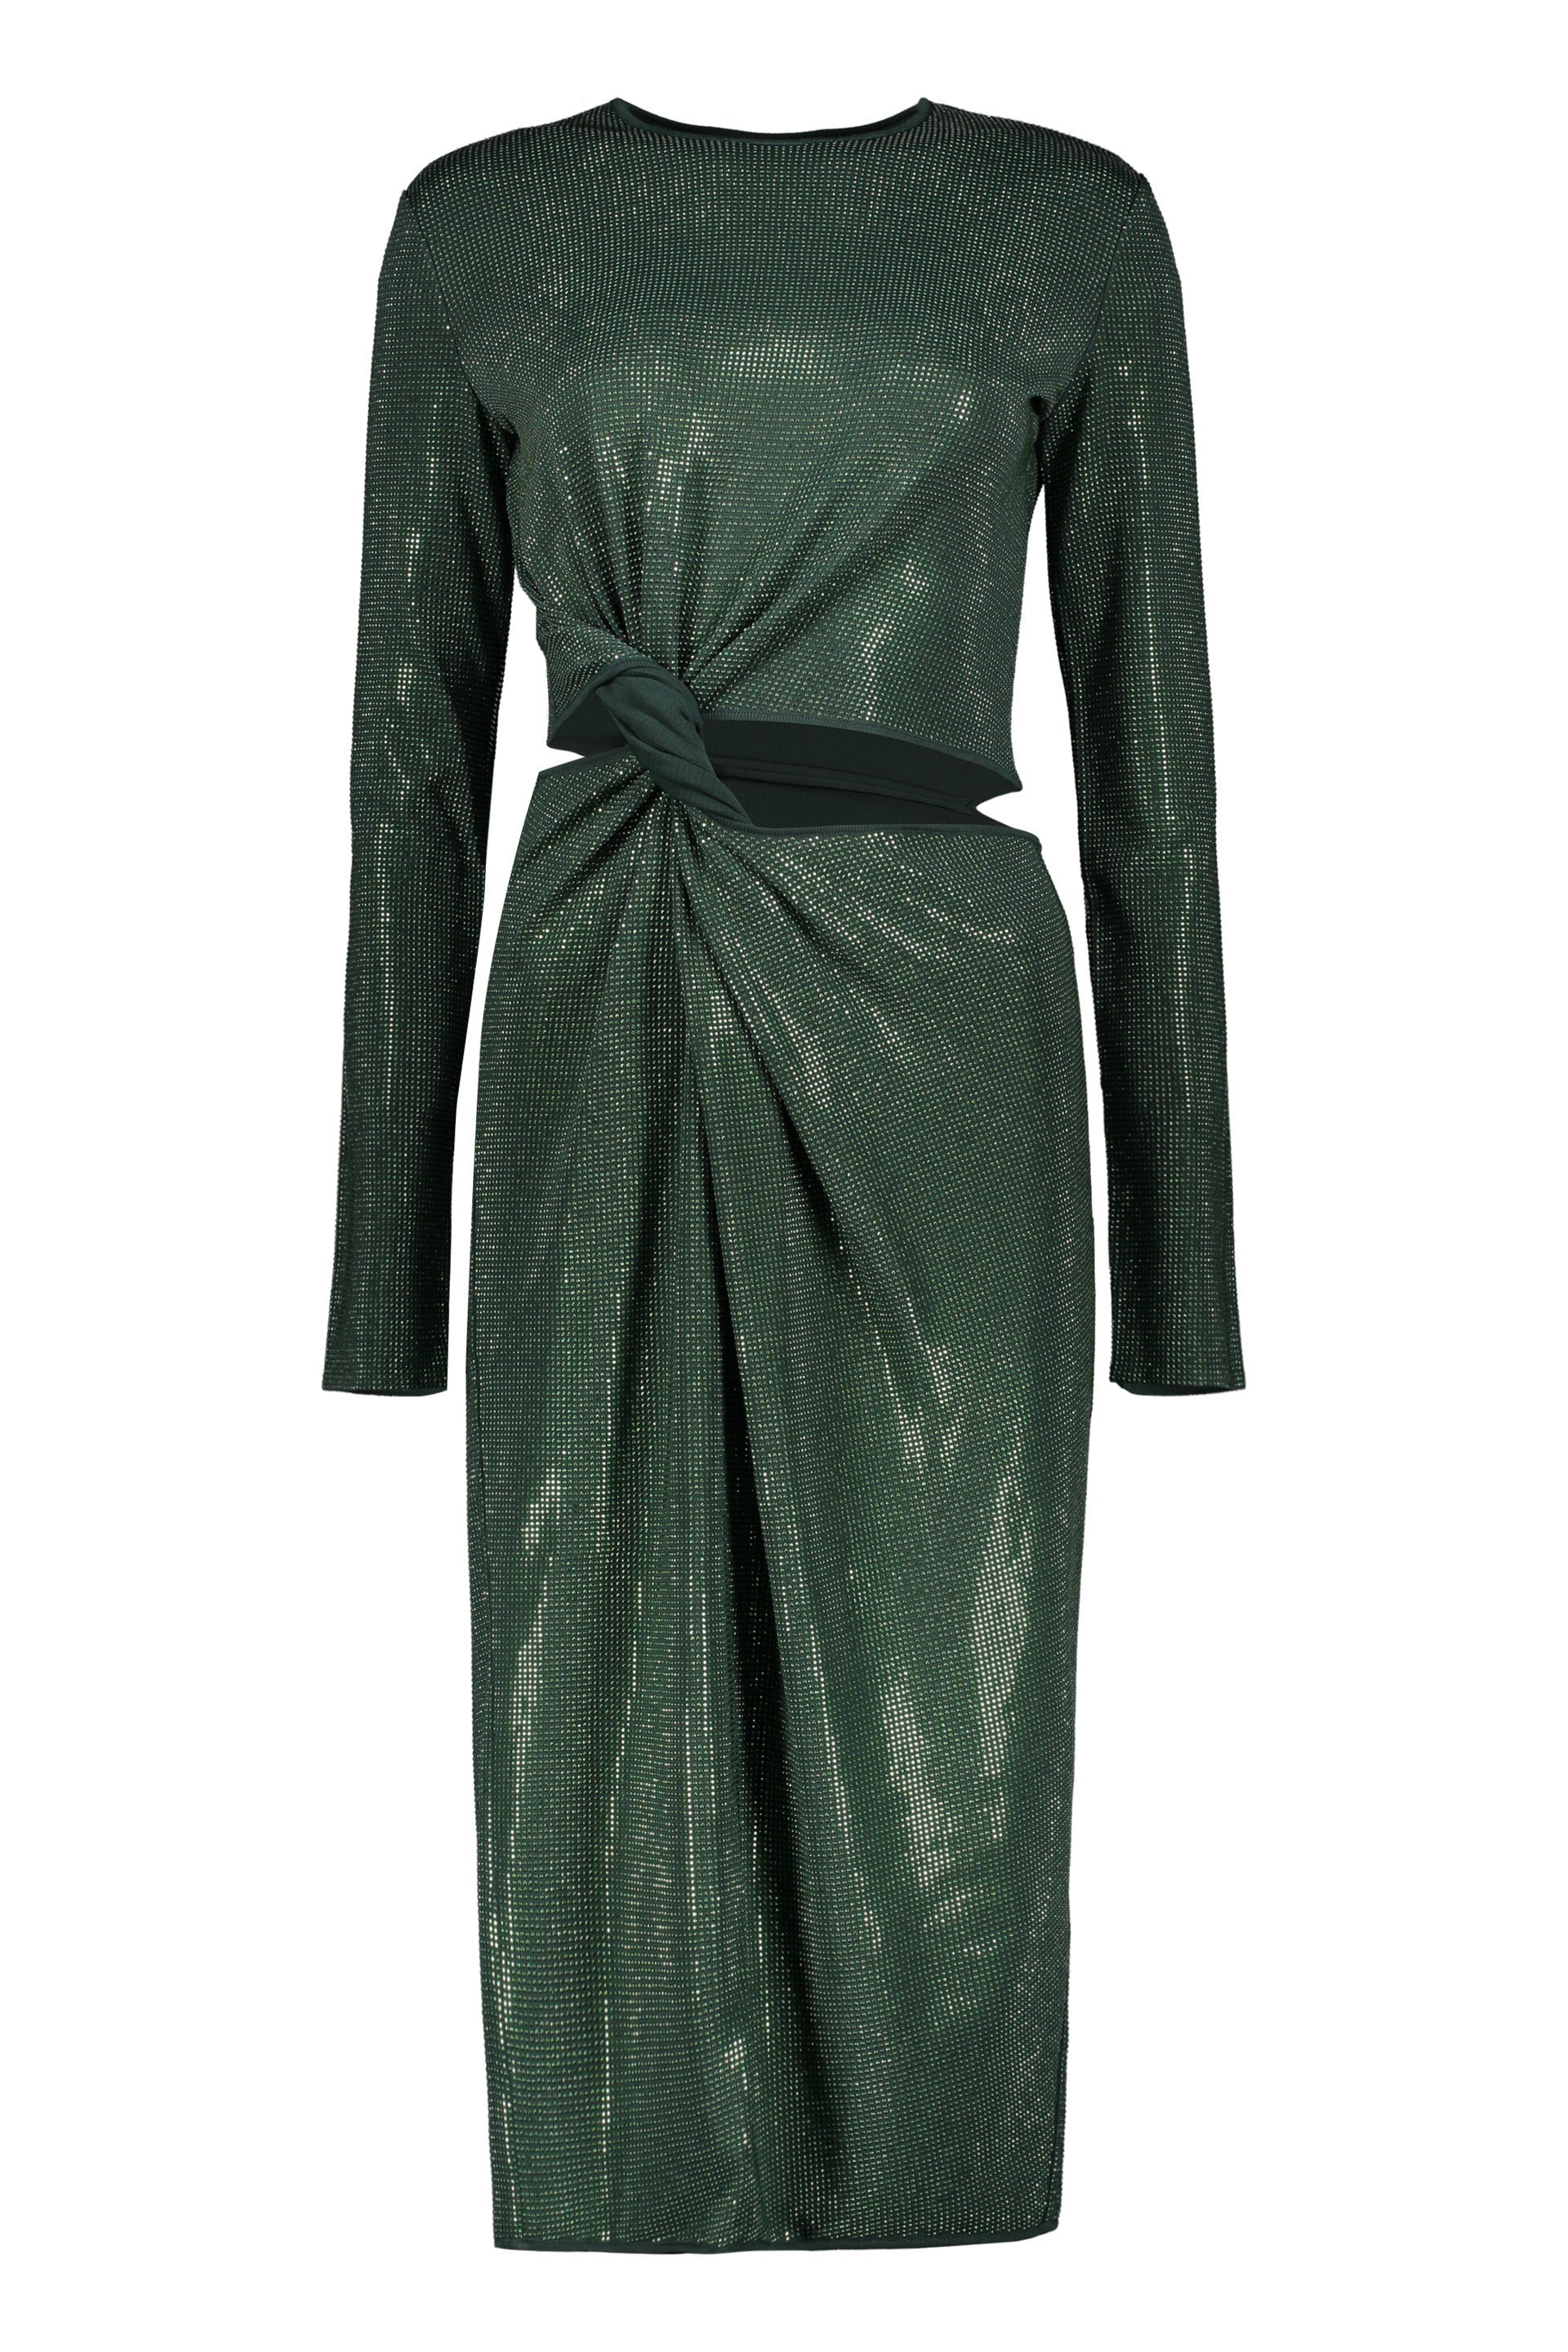 Rhinestone dress-Bottega Veneta-OUTLET-SALE-S-ARCHIVIST